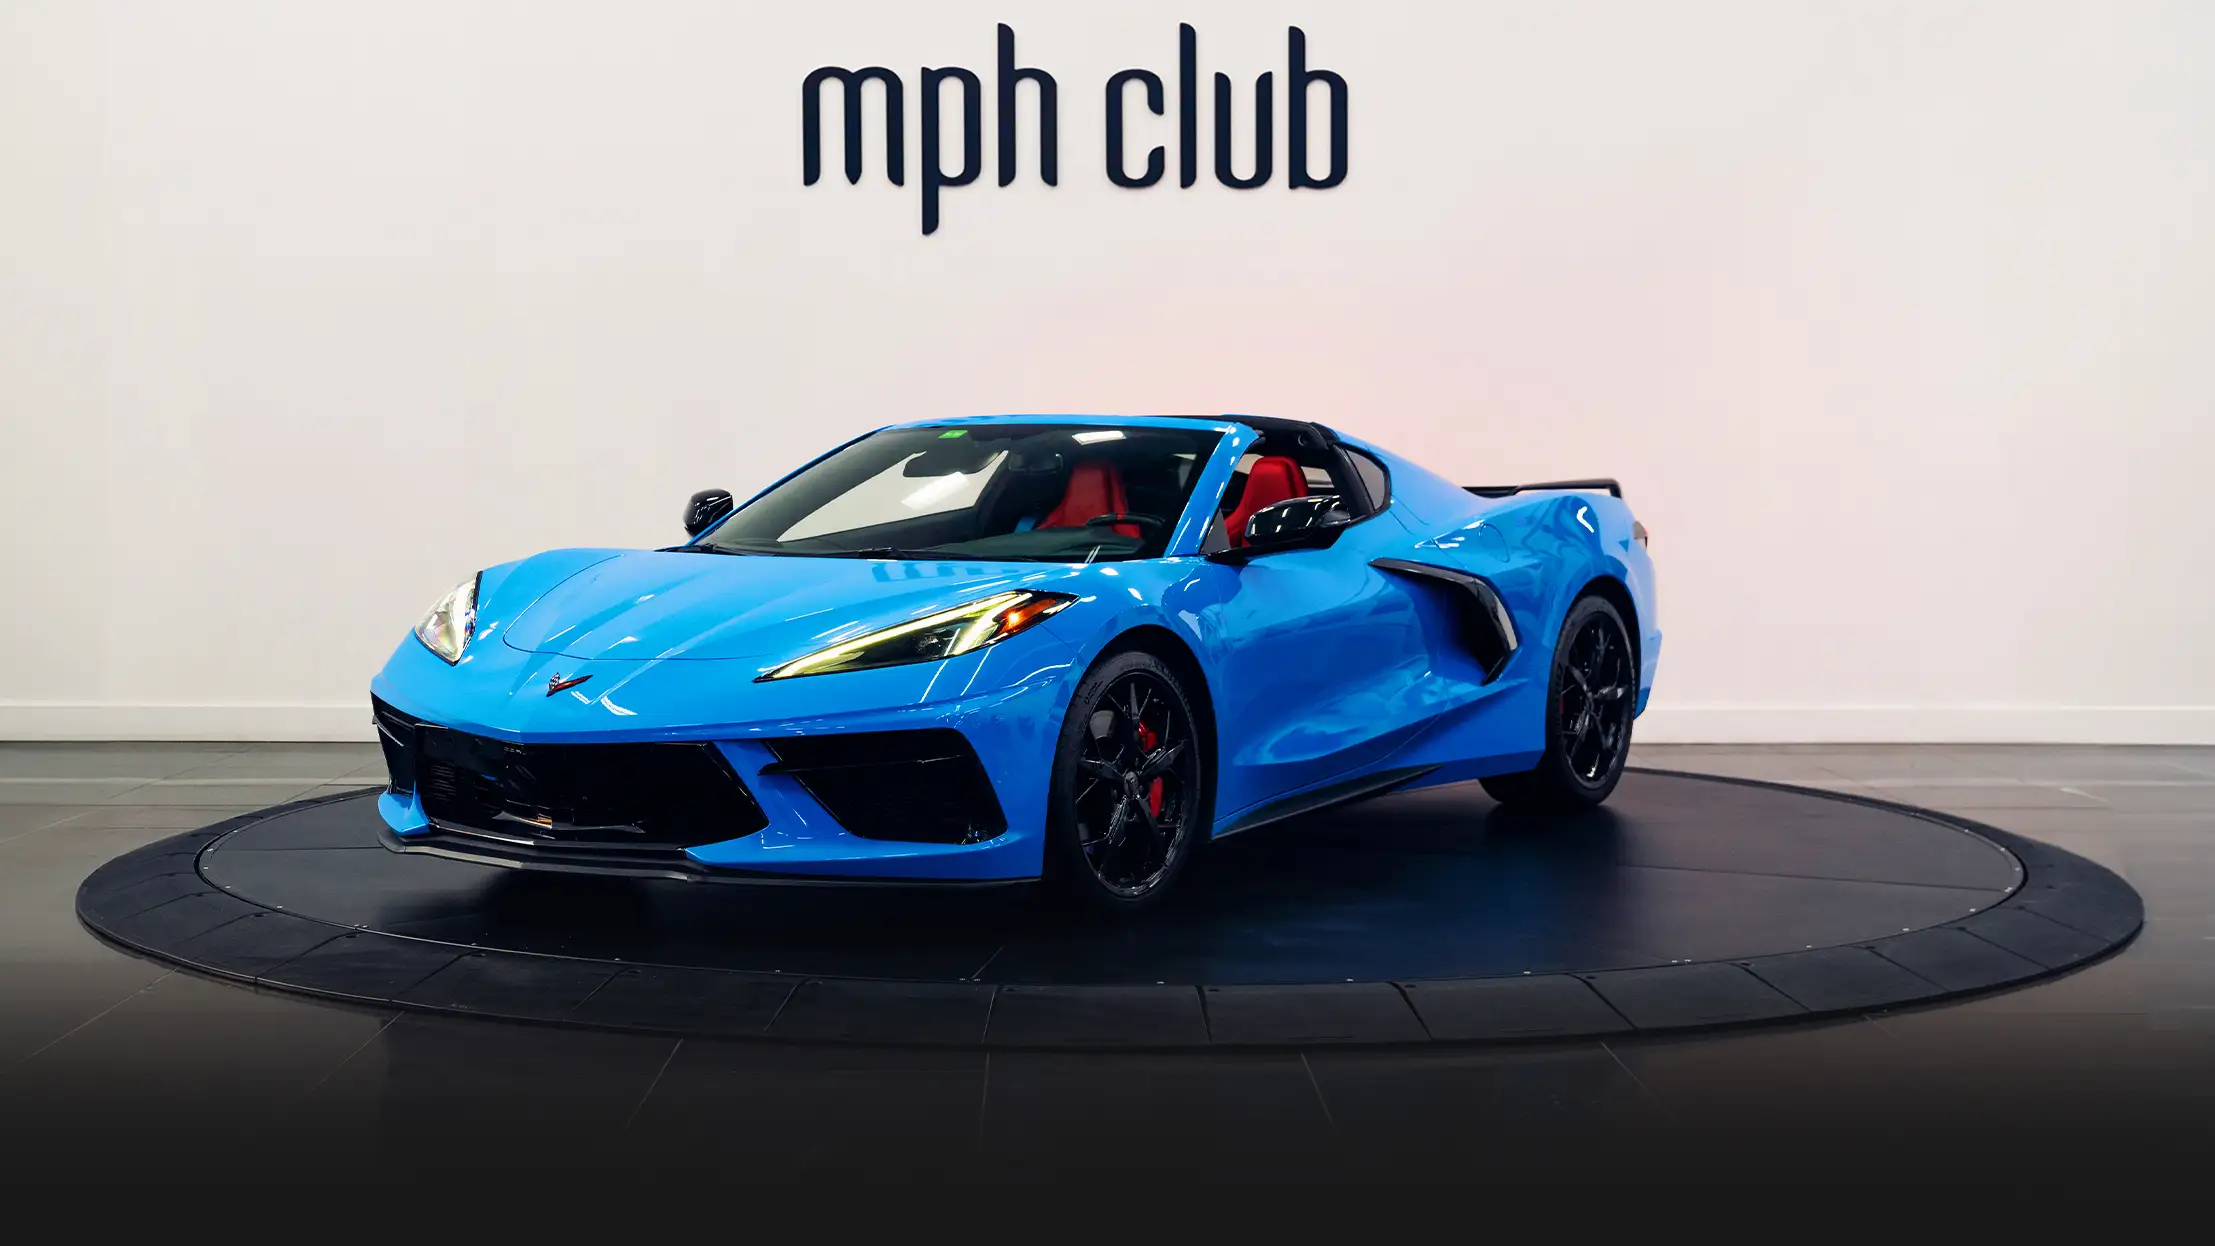 Blue Chevrolet Corvette C8 rental profile view - mph club turntable